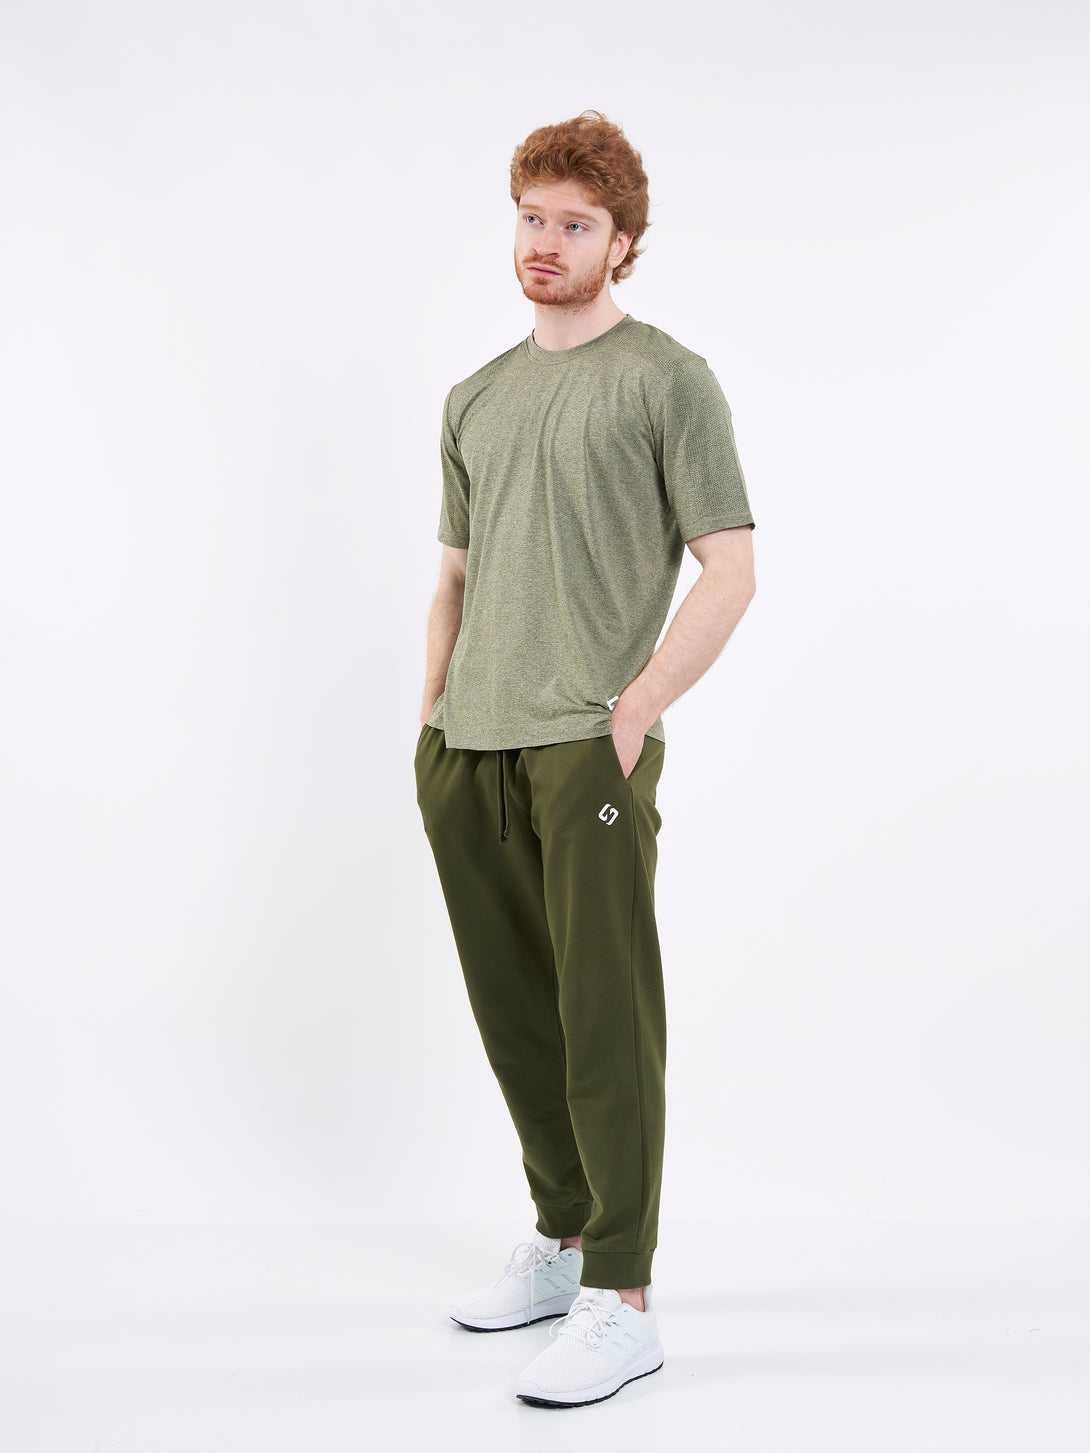 A Man Wearing Zen Khaki Color Men's Essential Comfort Joggers. Regular Fit